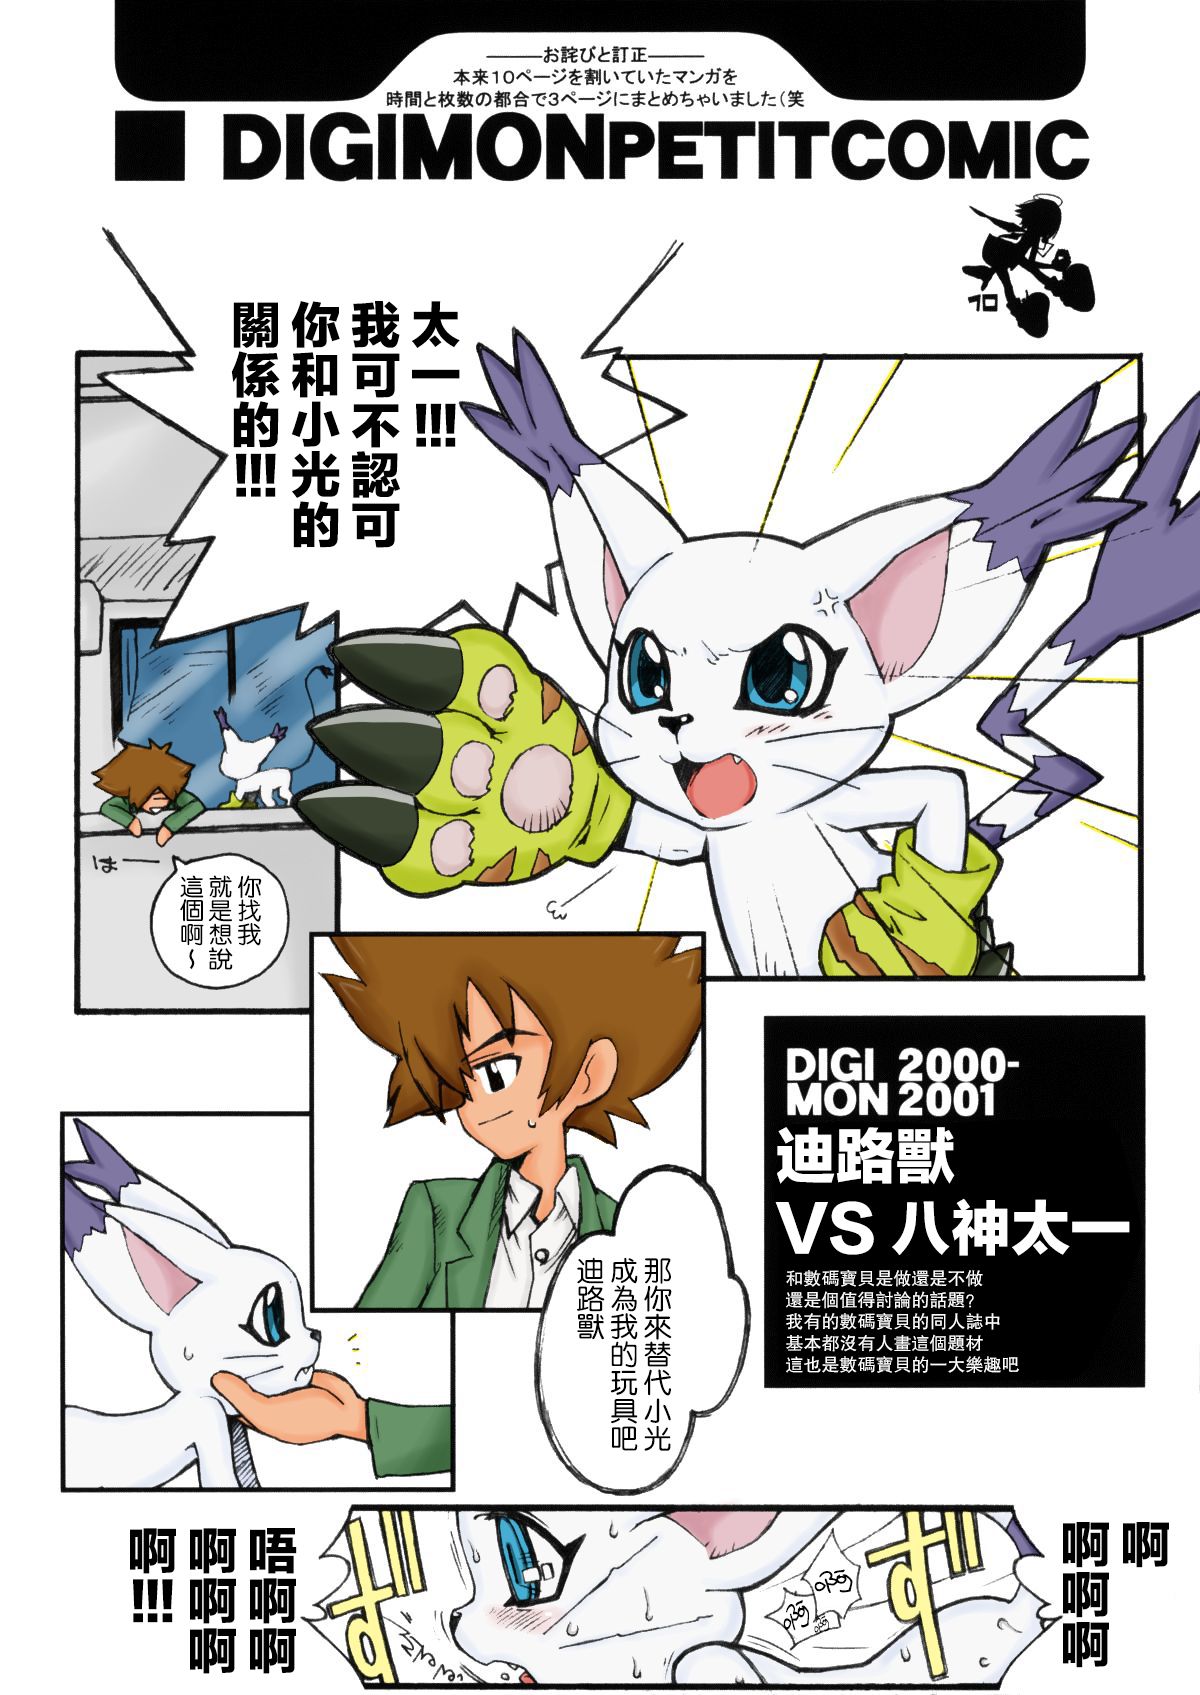 (C61) [Bottomress Pit (盆座菓子)] Digimon Queen 01+ (デジモンアドベンチャー) [無修正] [カラー化] [中国翻訳]